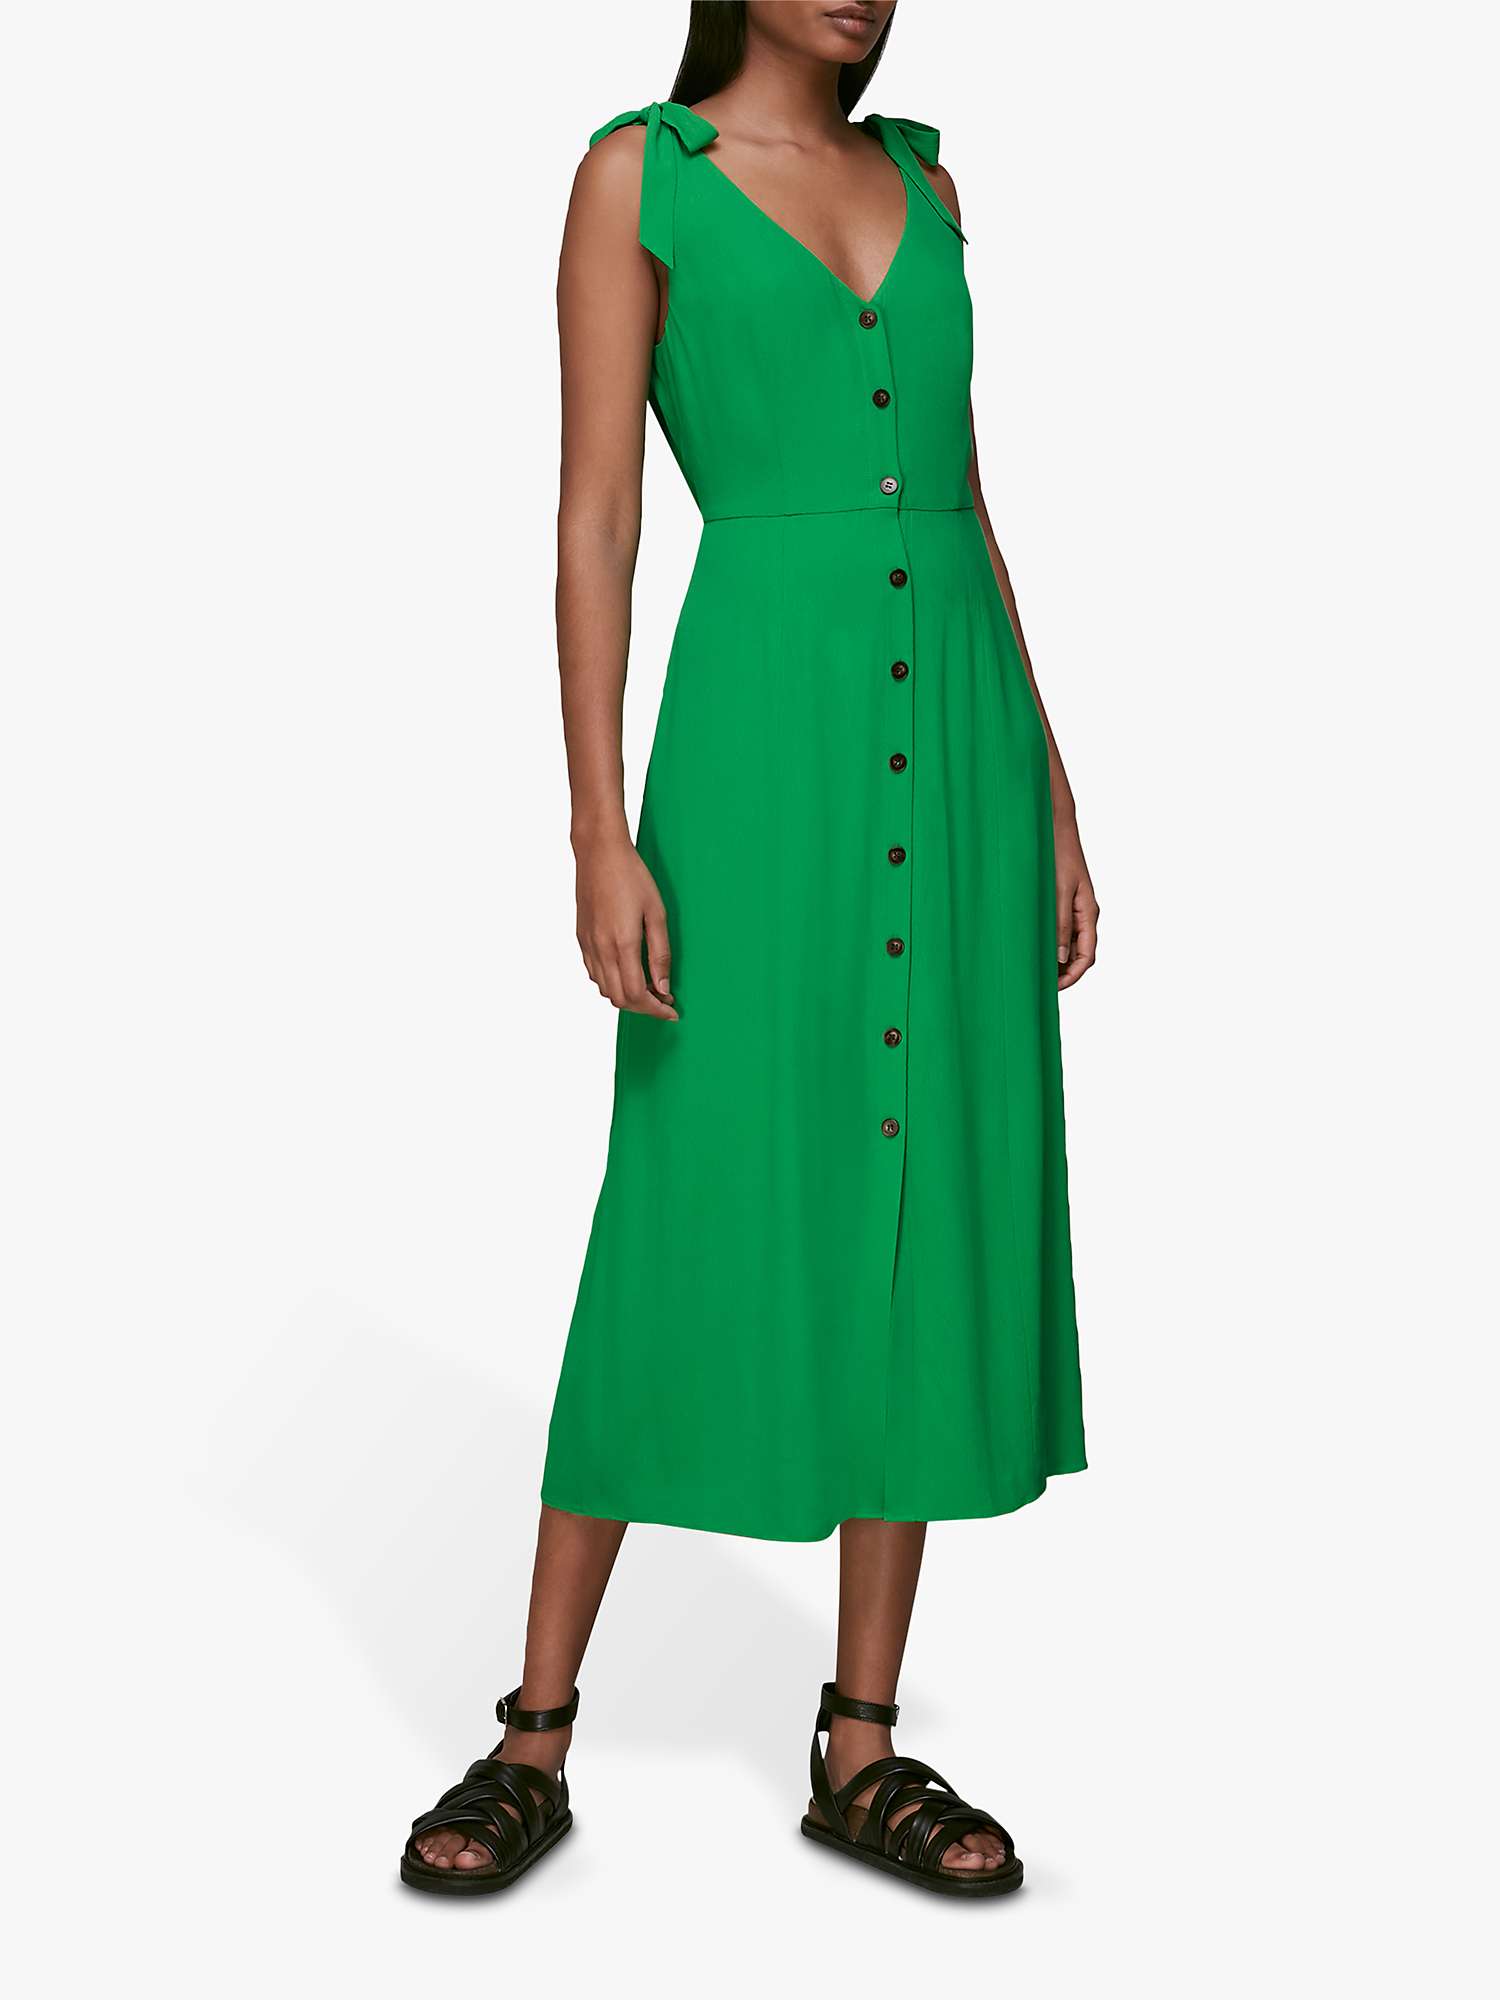 Whistles Hanna Tie Shoulder Dress, Green at John Lewis & Partners